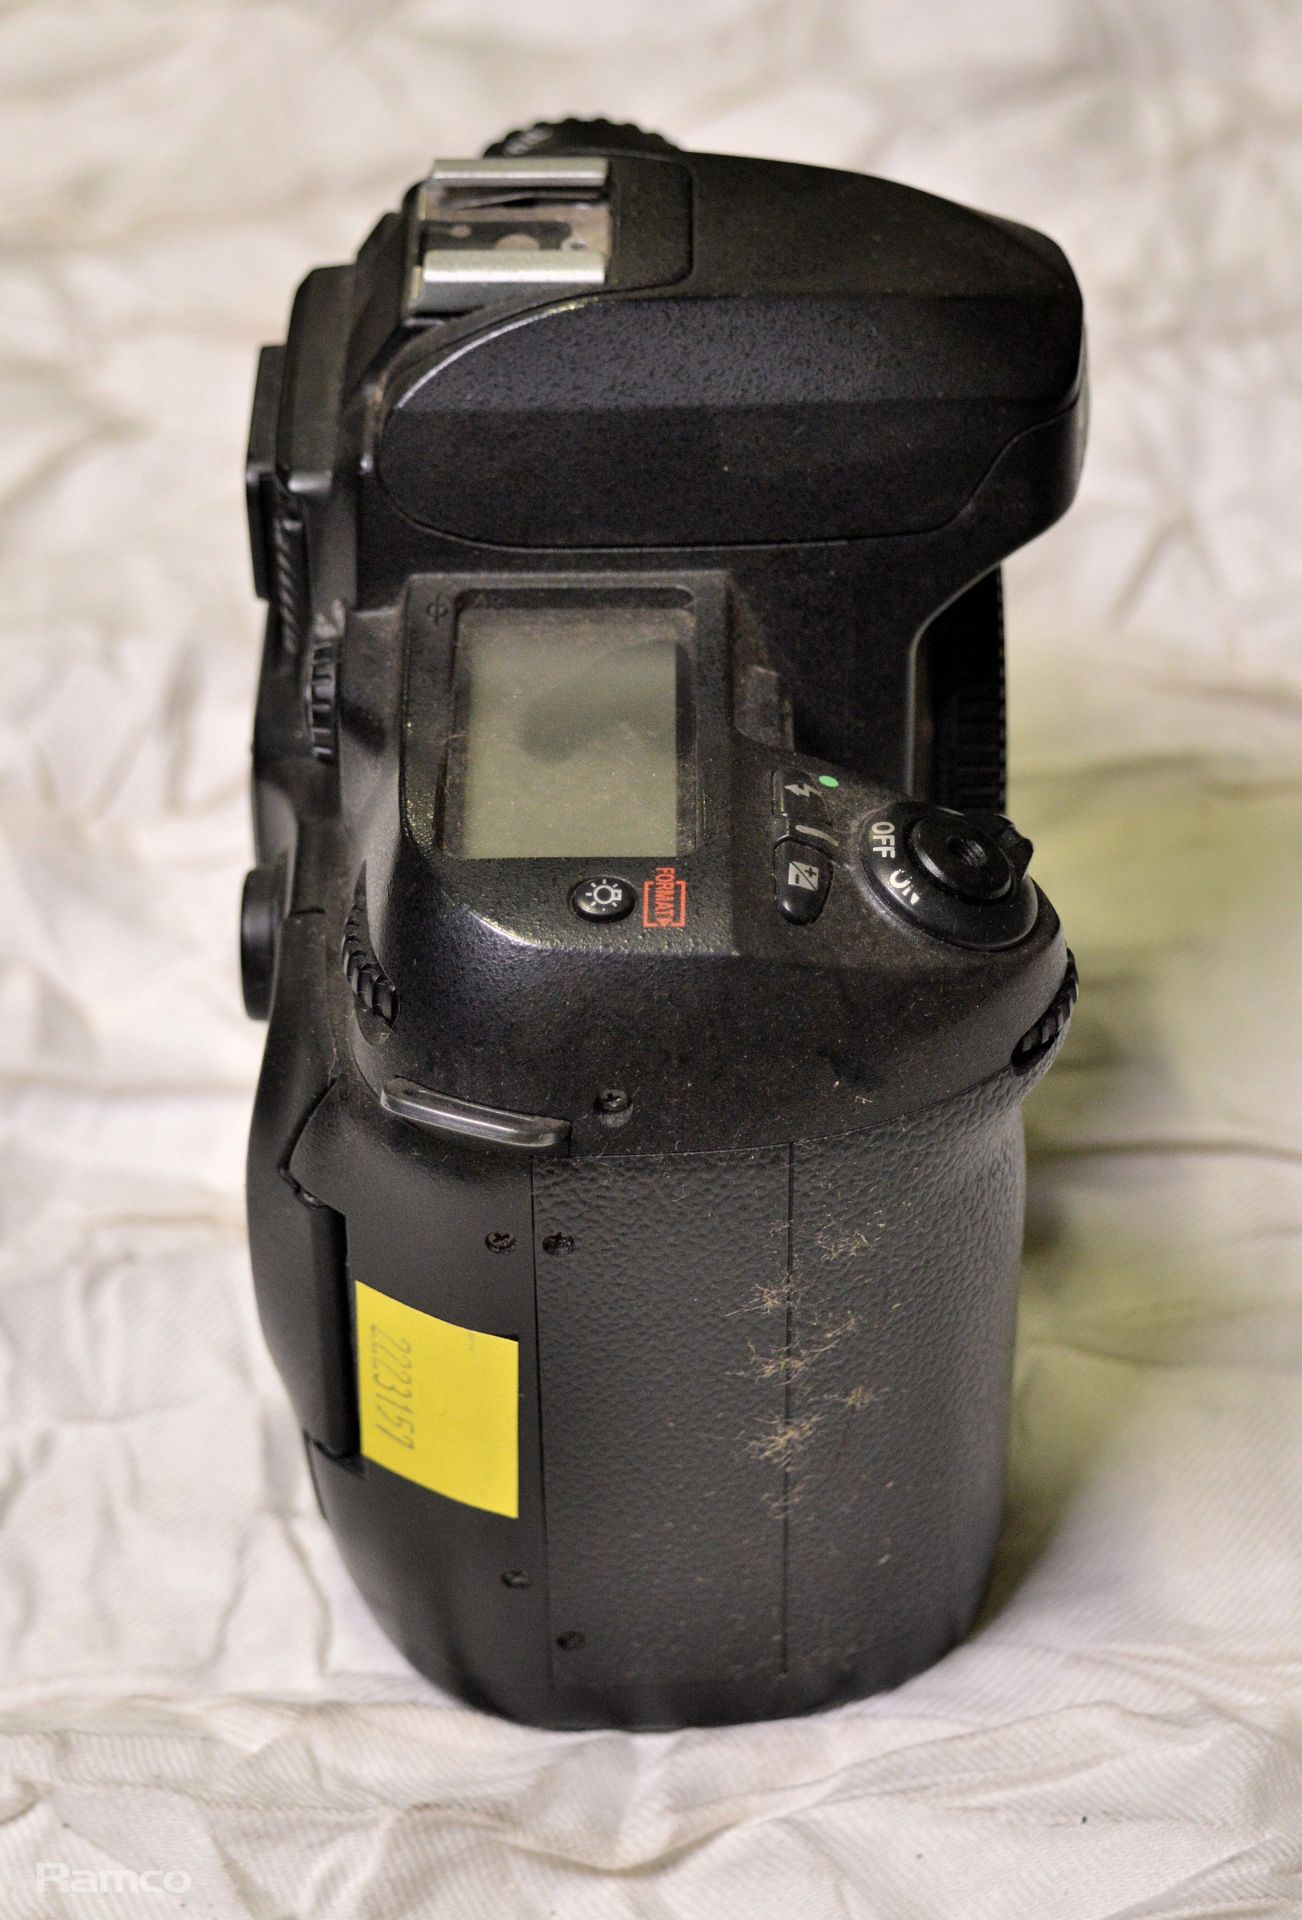 Nikon D100 SLR Digital Camera Body - Image 3 of 7